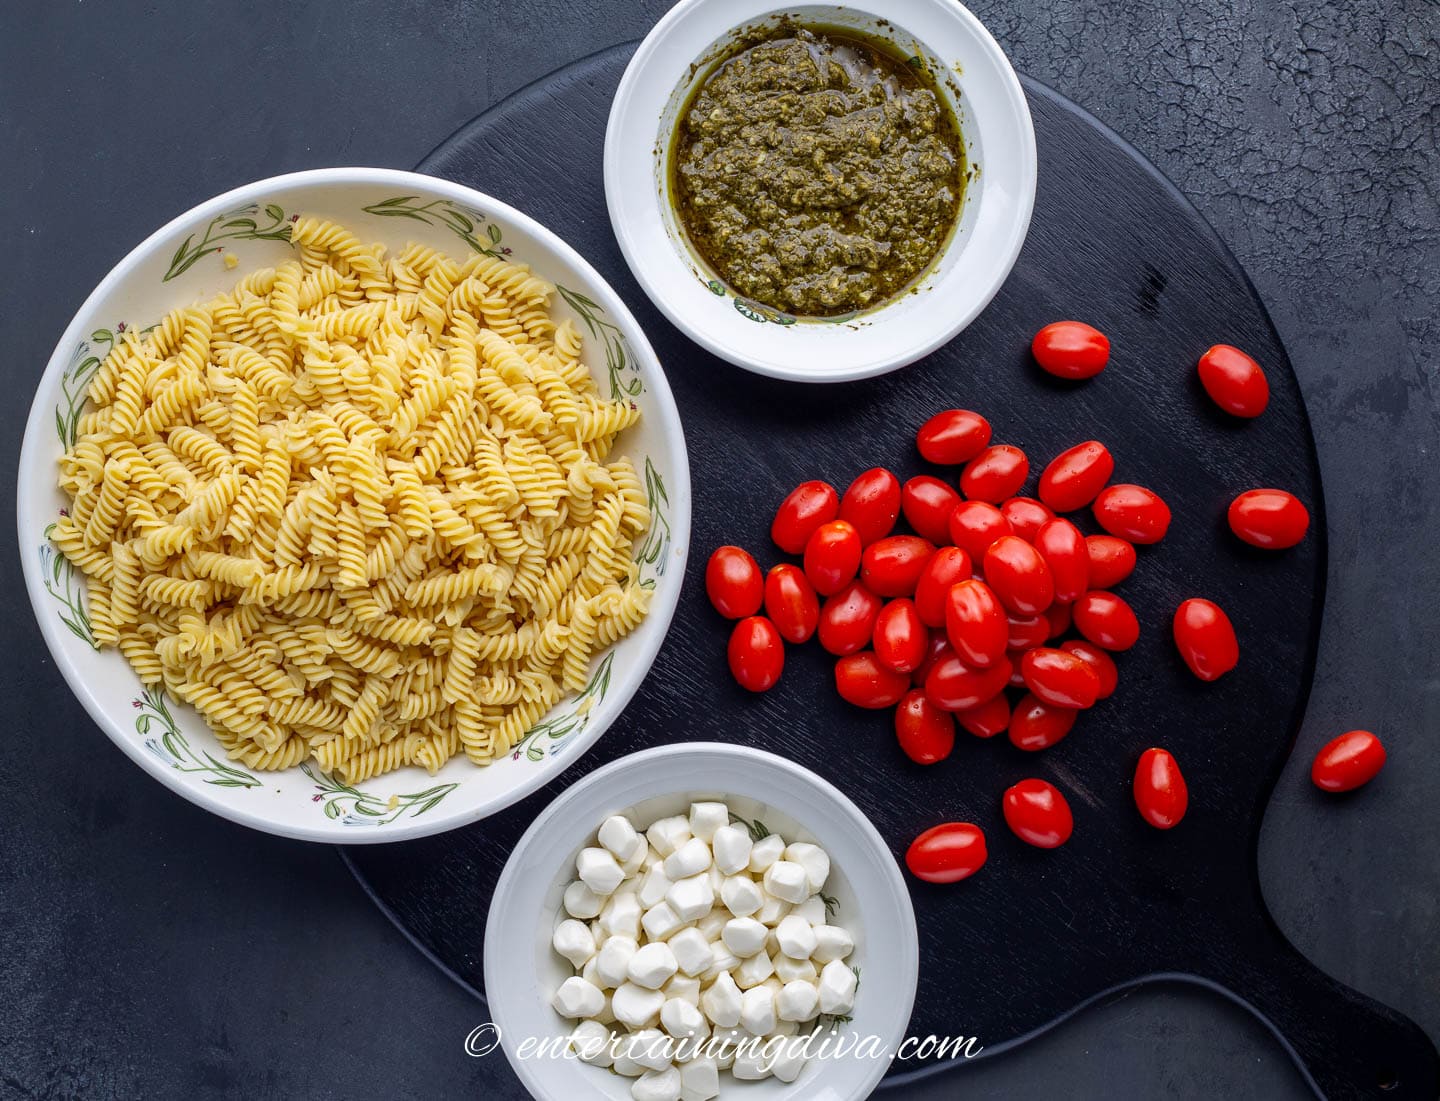 ingredients for 4-ingredient caprese pasta salad - rotini pasta, mozzarella pearls, grape tomatoes and basil pesto